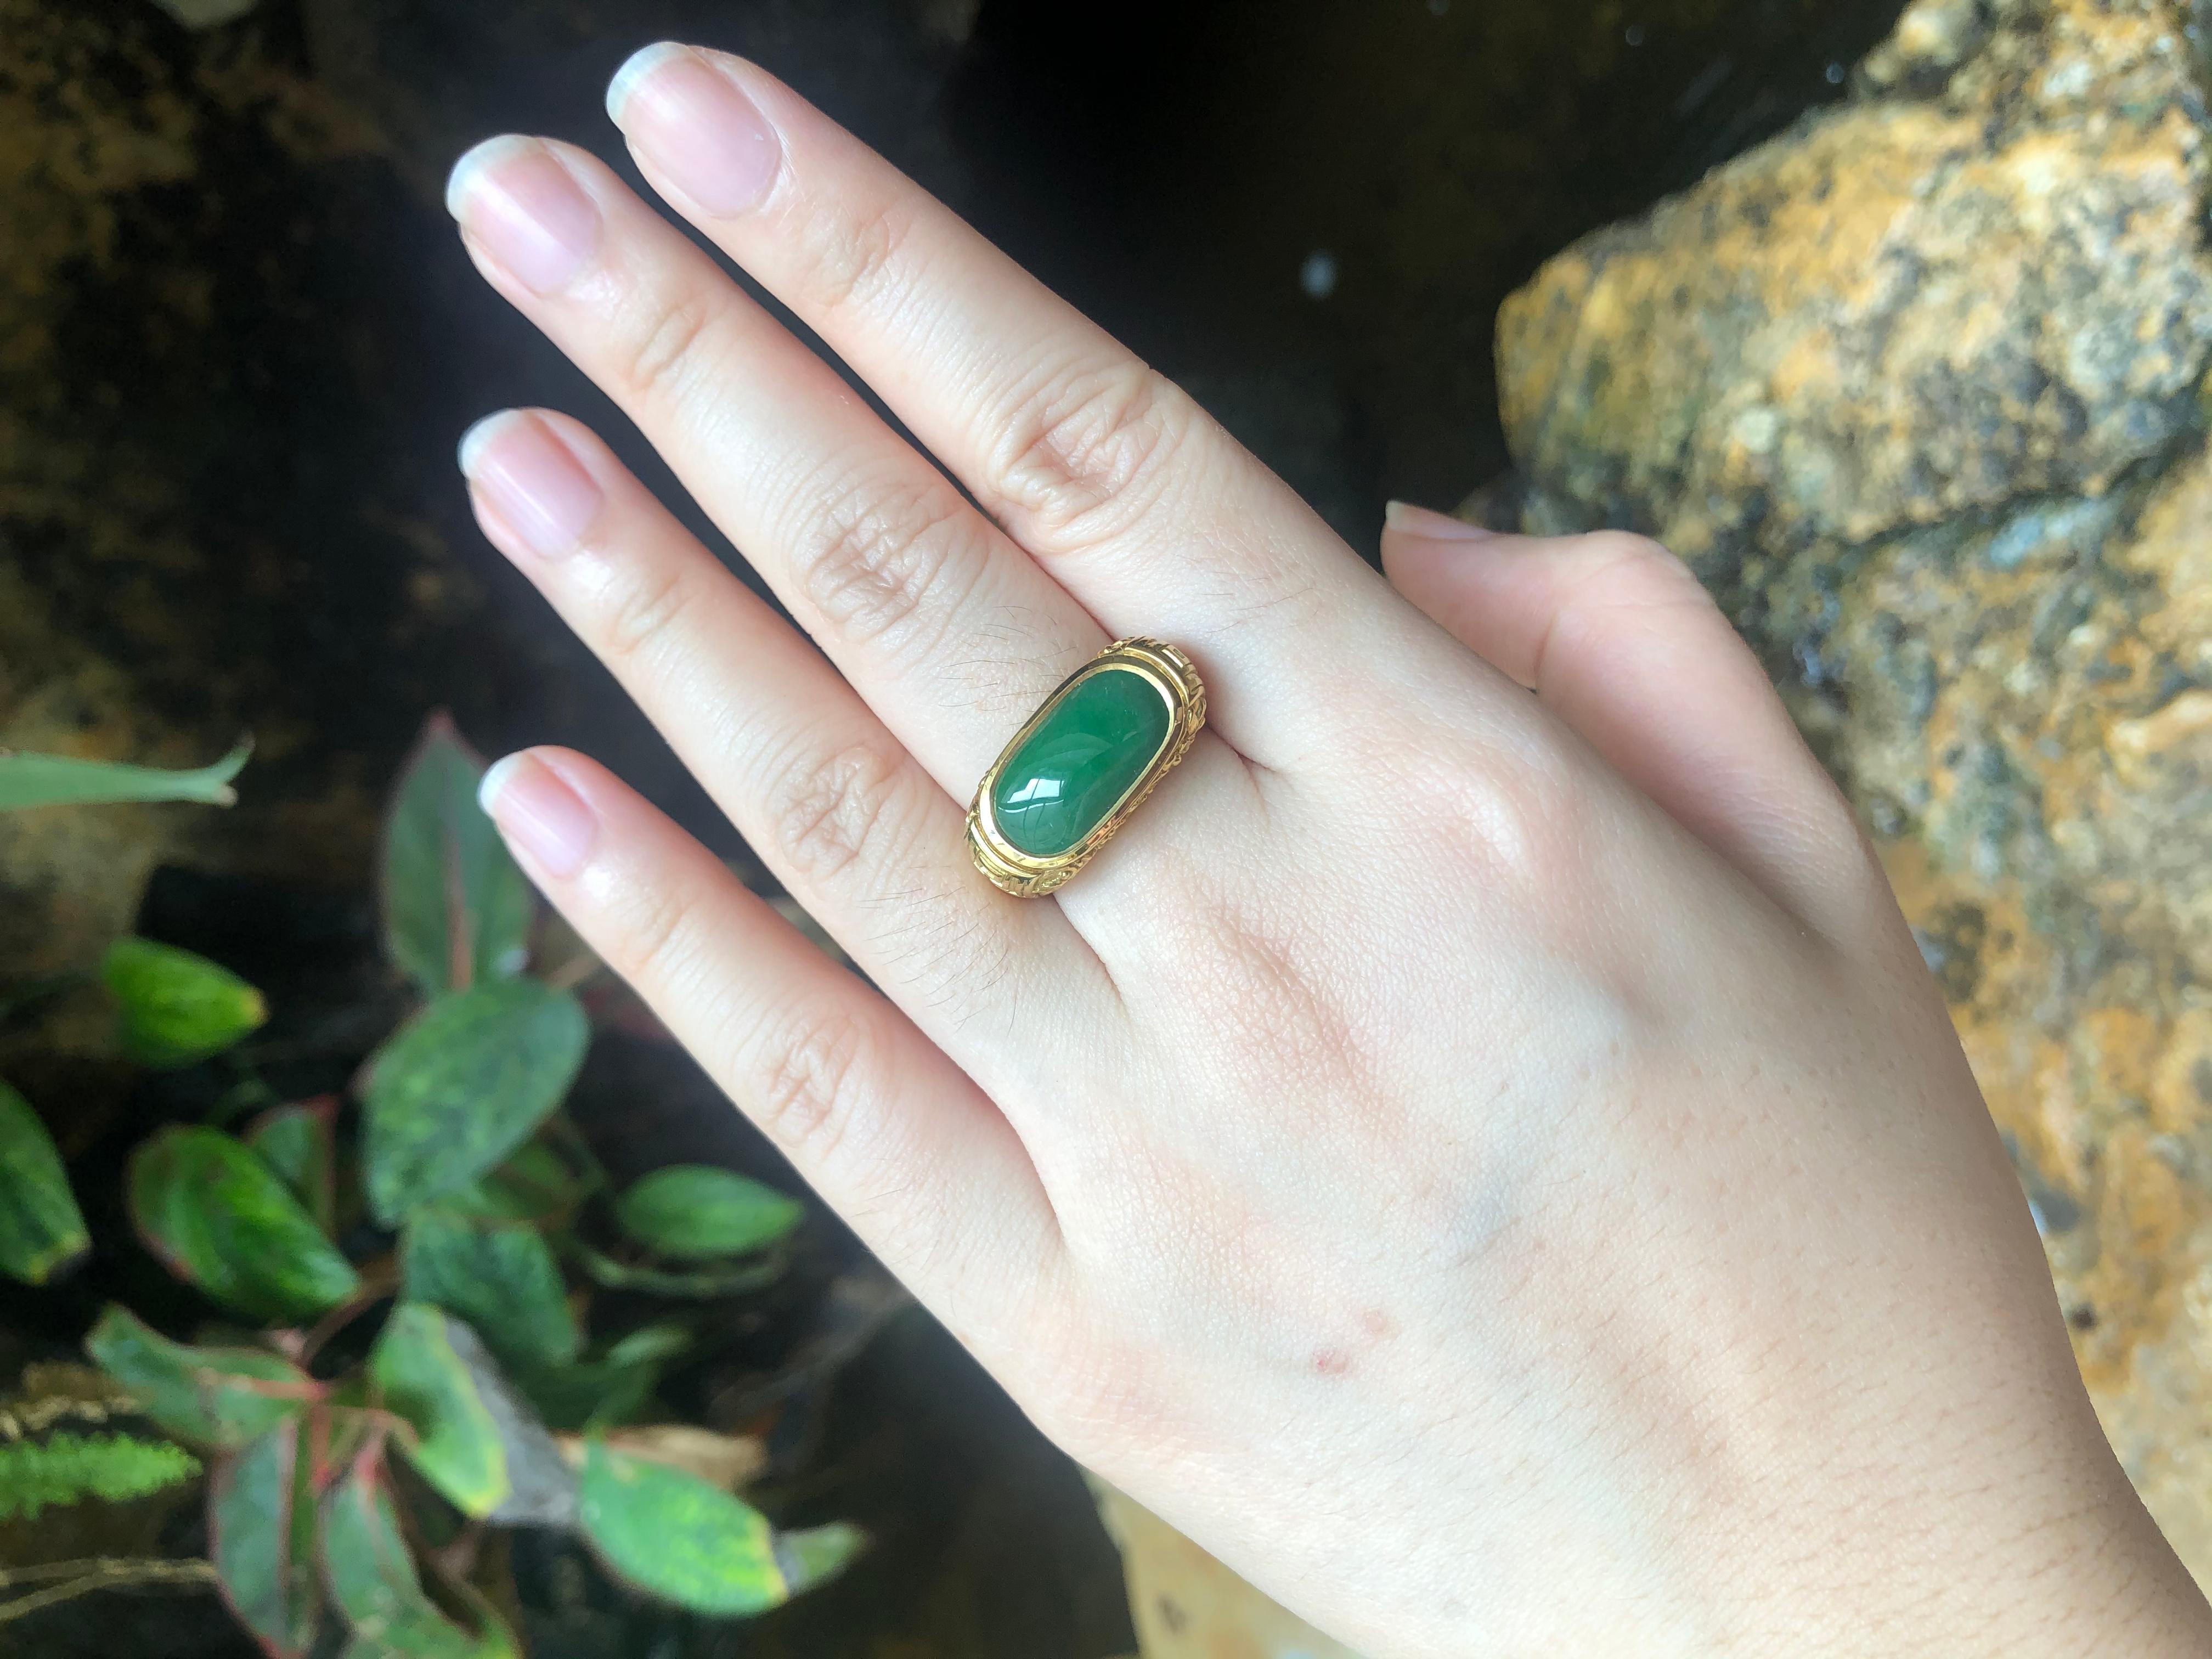 Jade 5.16 carats Ring set in 18 Karat Gold Settings

Width:  2.2 cm 
Length: 1.1 cm
Ring Size: 59
Total Weight: 17.5 grams

